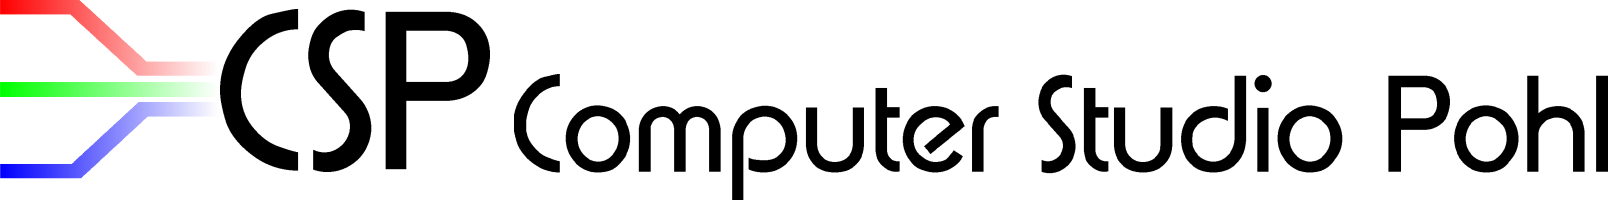 Logo CSP Computer Studio Pohl